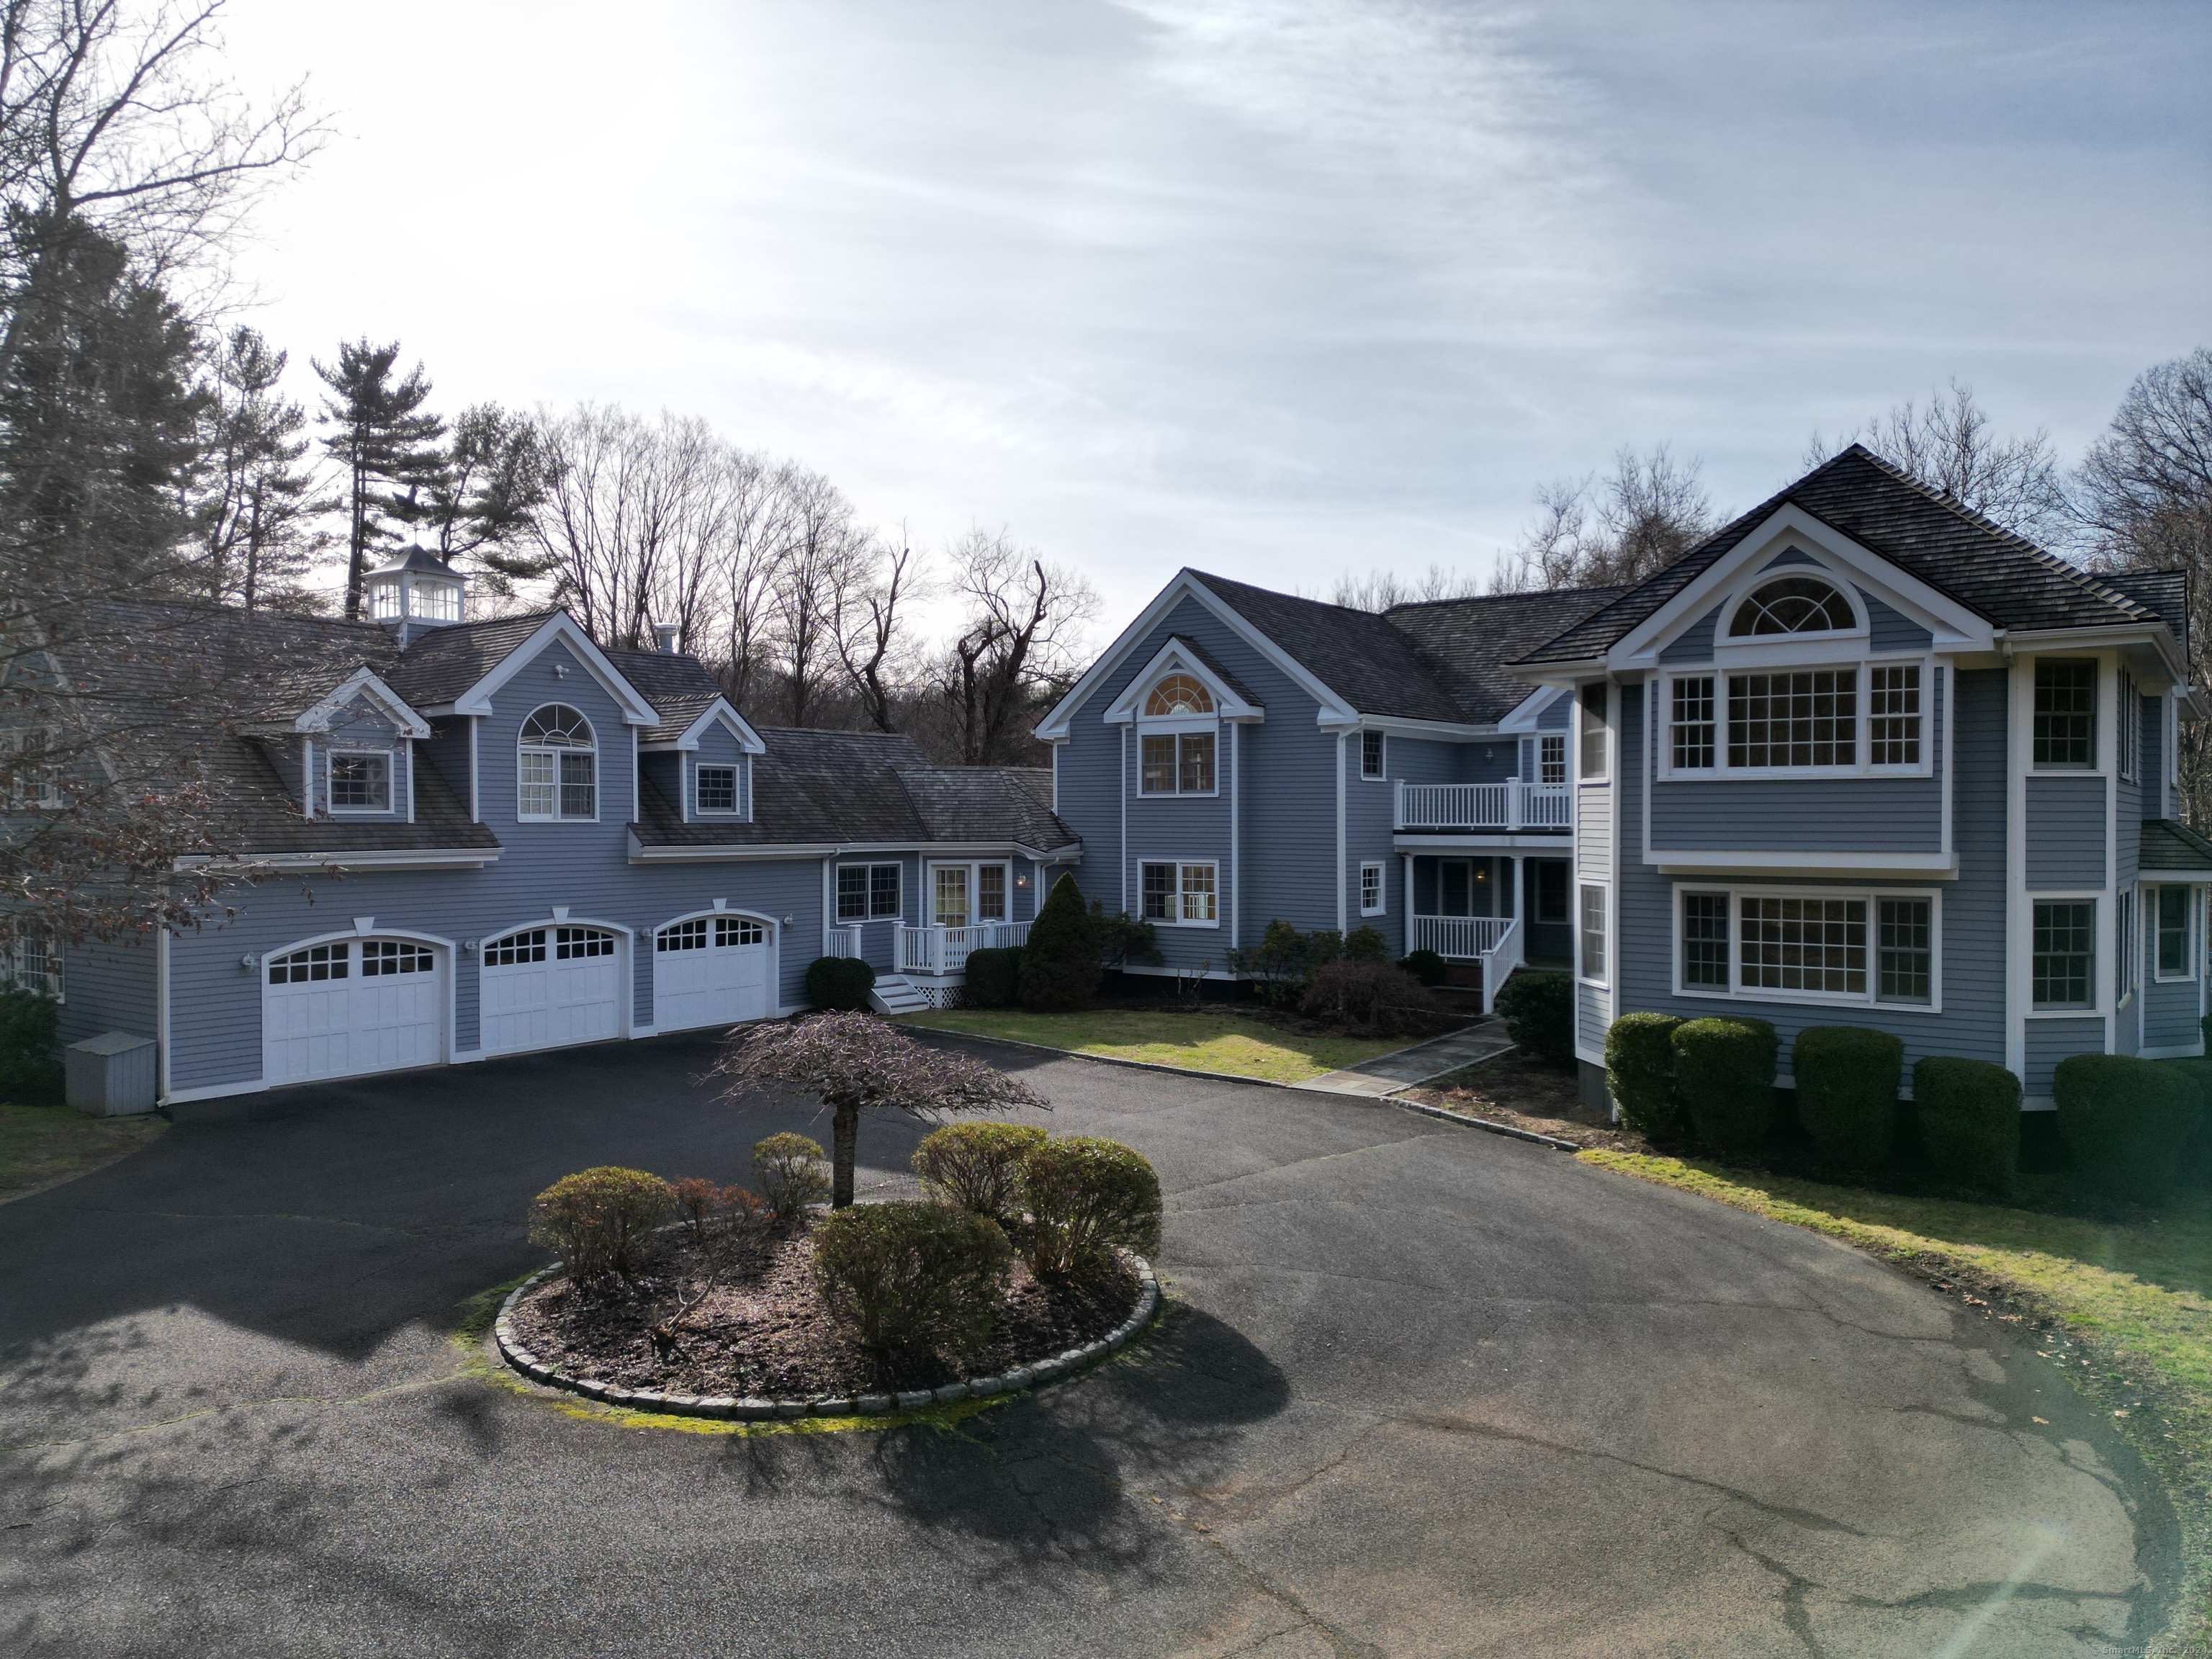 Rental Property at 5 Lyons Plains Road, Westport, Connecticut - Bedrooms: 5 
Bathrooms: 7 
Rooms: 15  - $11,000 MO.